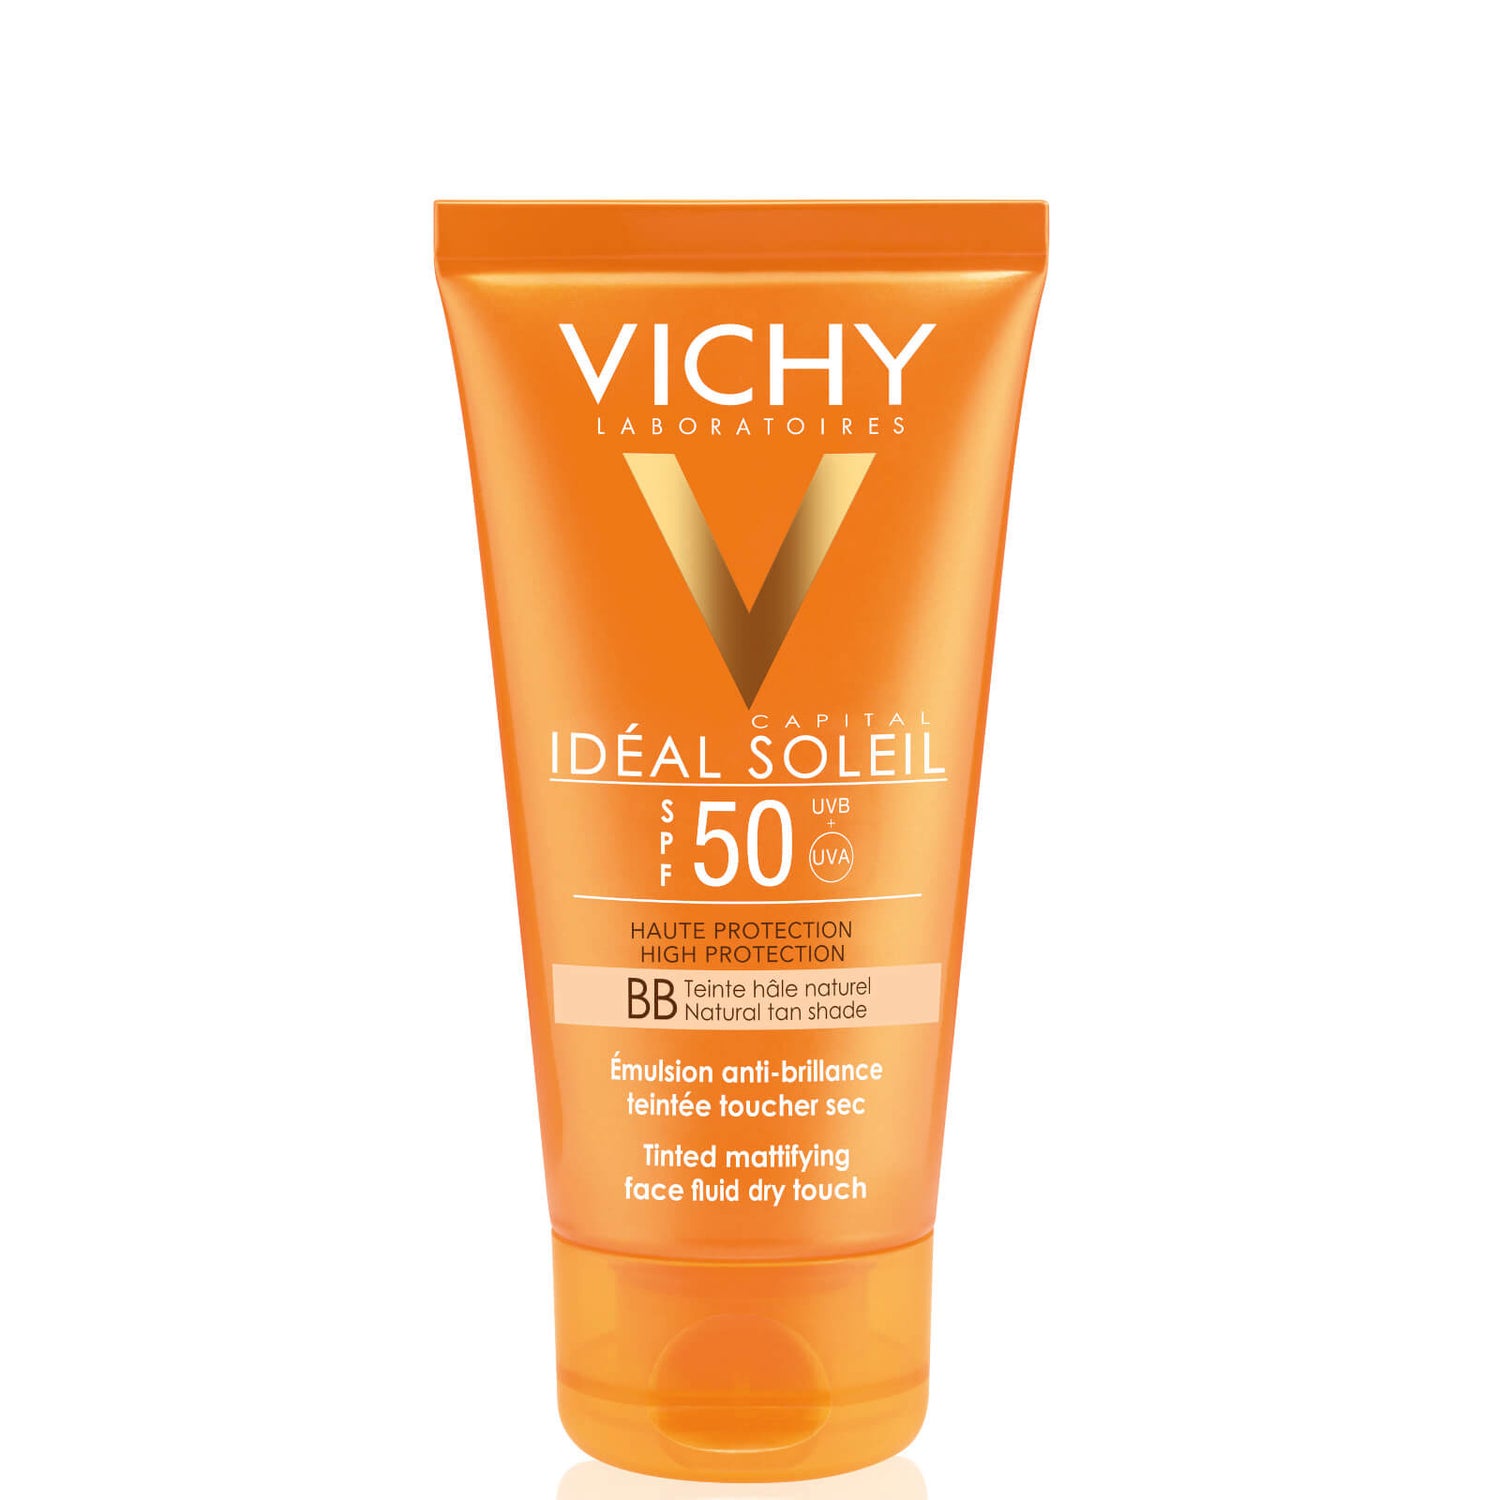 VICHY Ideal Soleil BB Tinted Face Fluid Matte 50ml